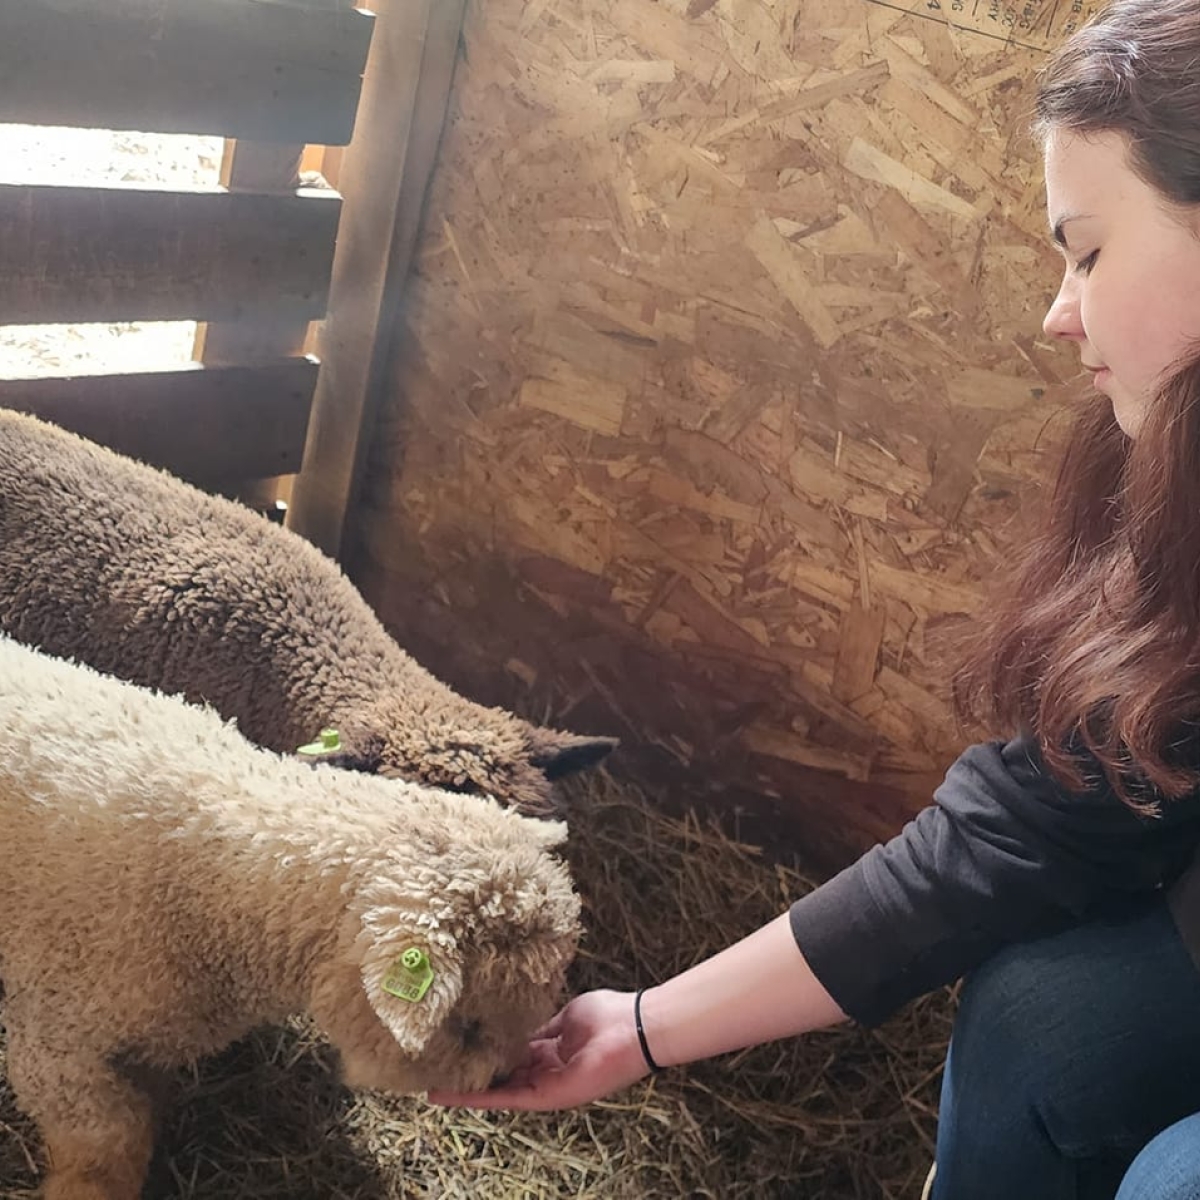 Girl feeding sheep at the petting zoo